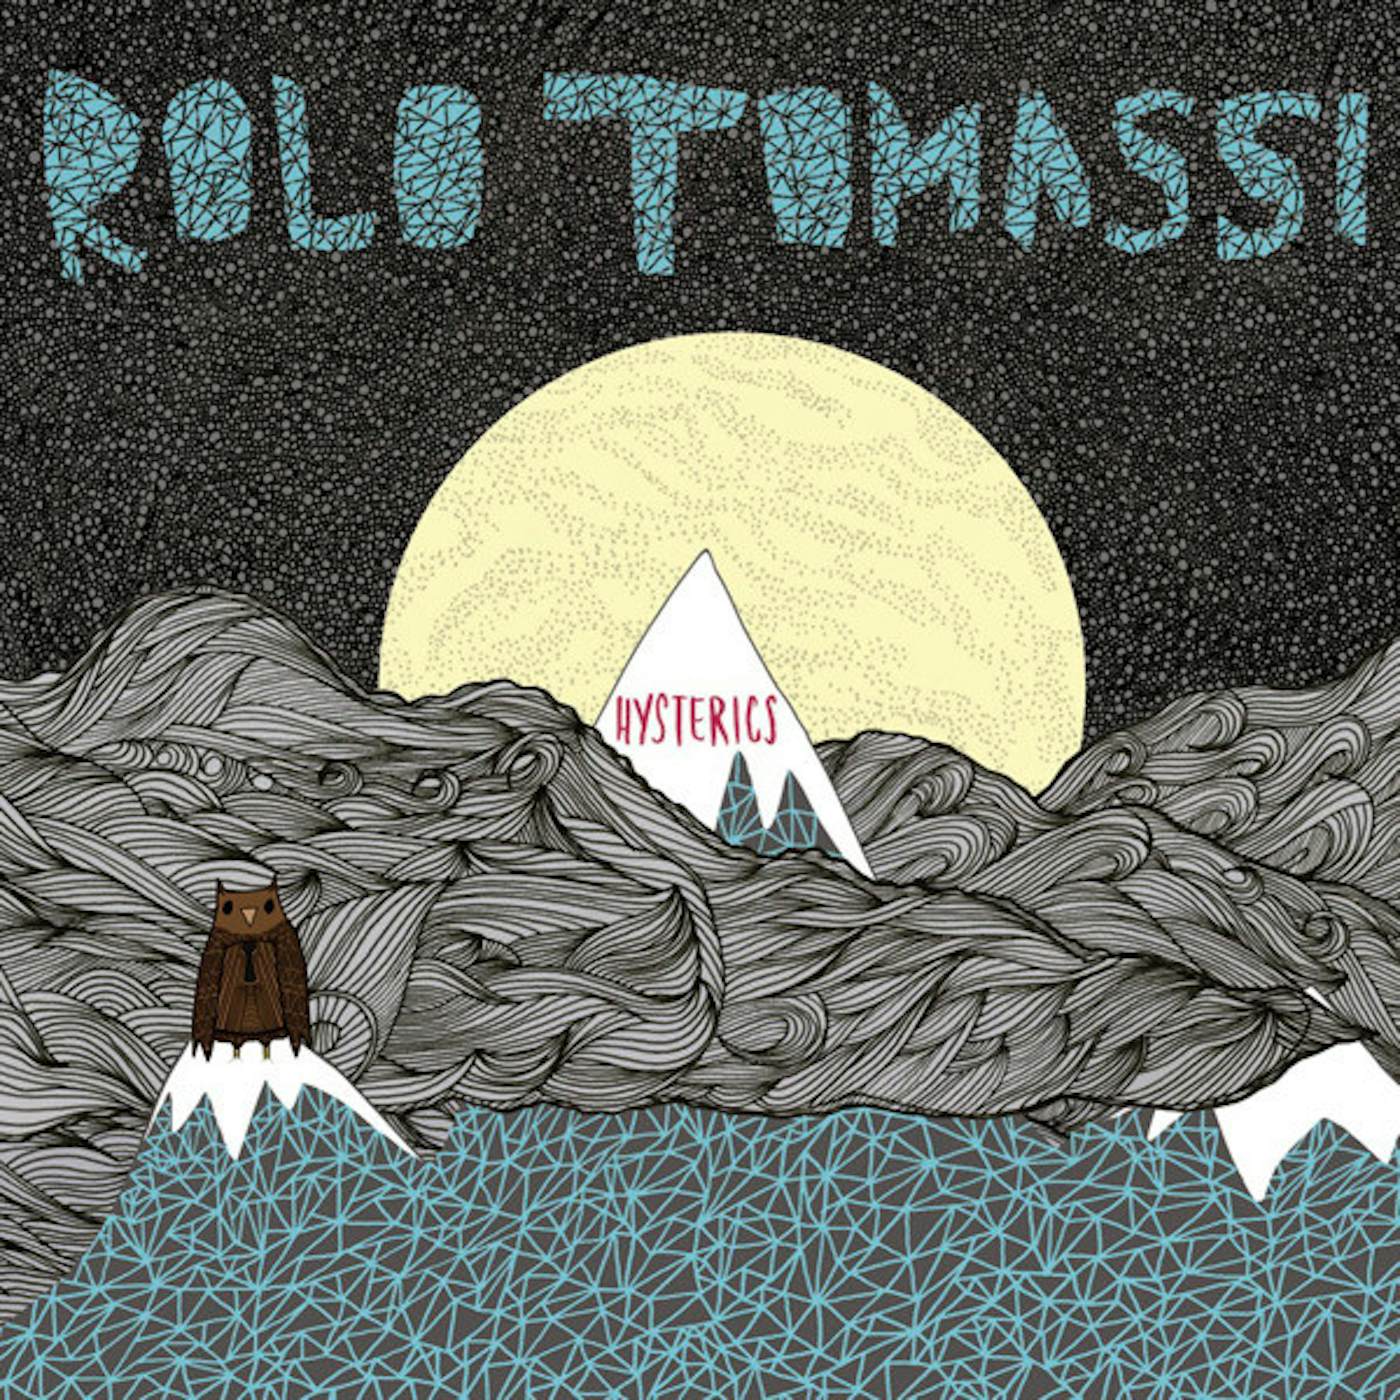 Rolo Tomassi HYSTERICS (Vinyl)